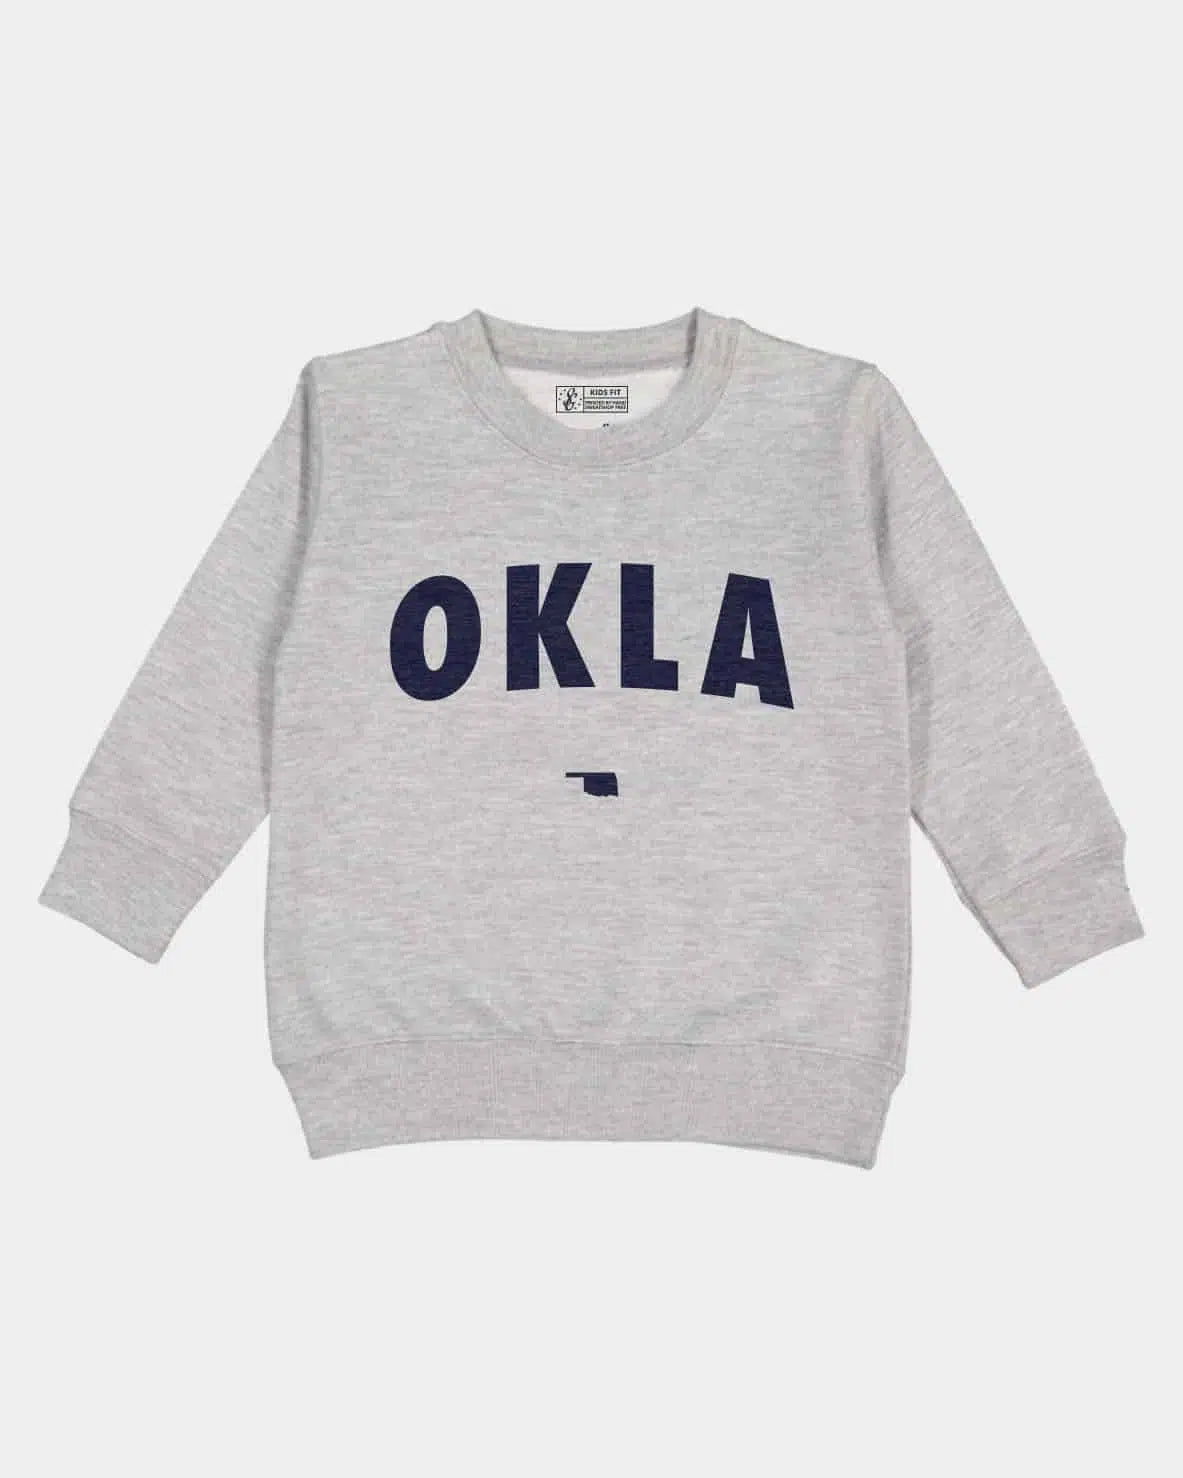 OKLA Kid's Pullover - Grey